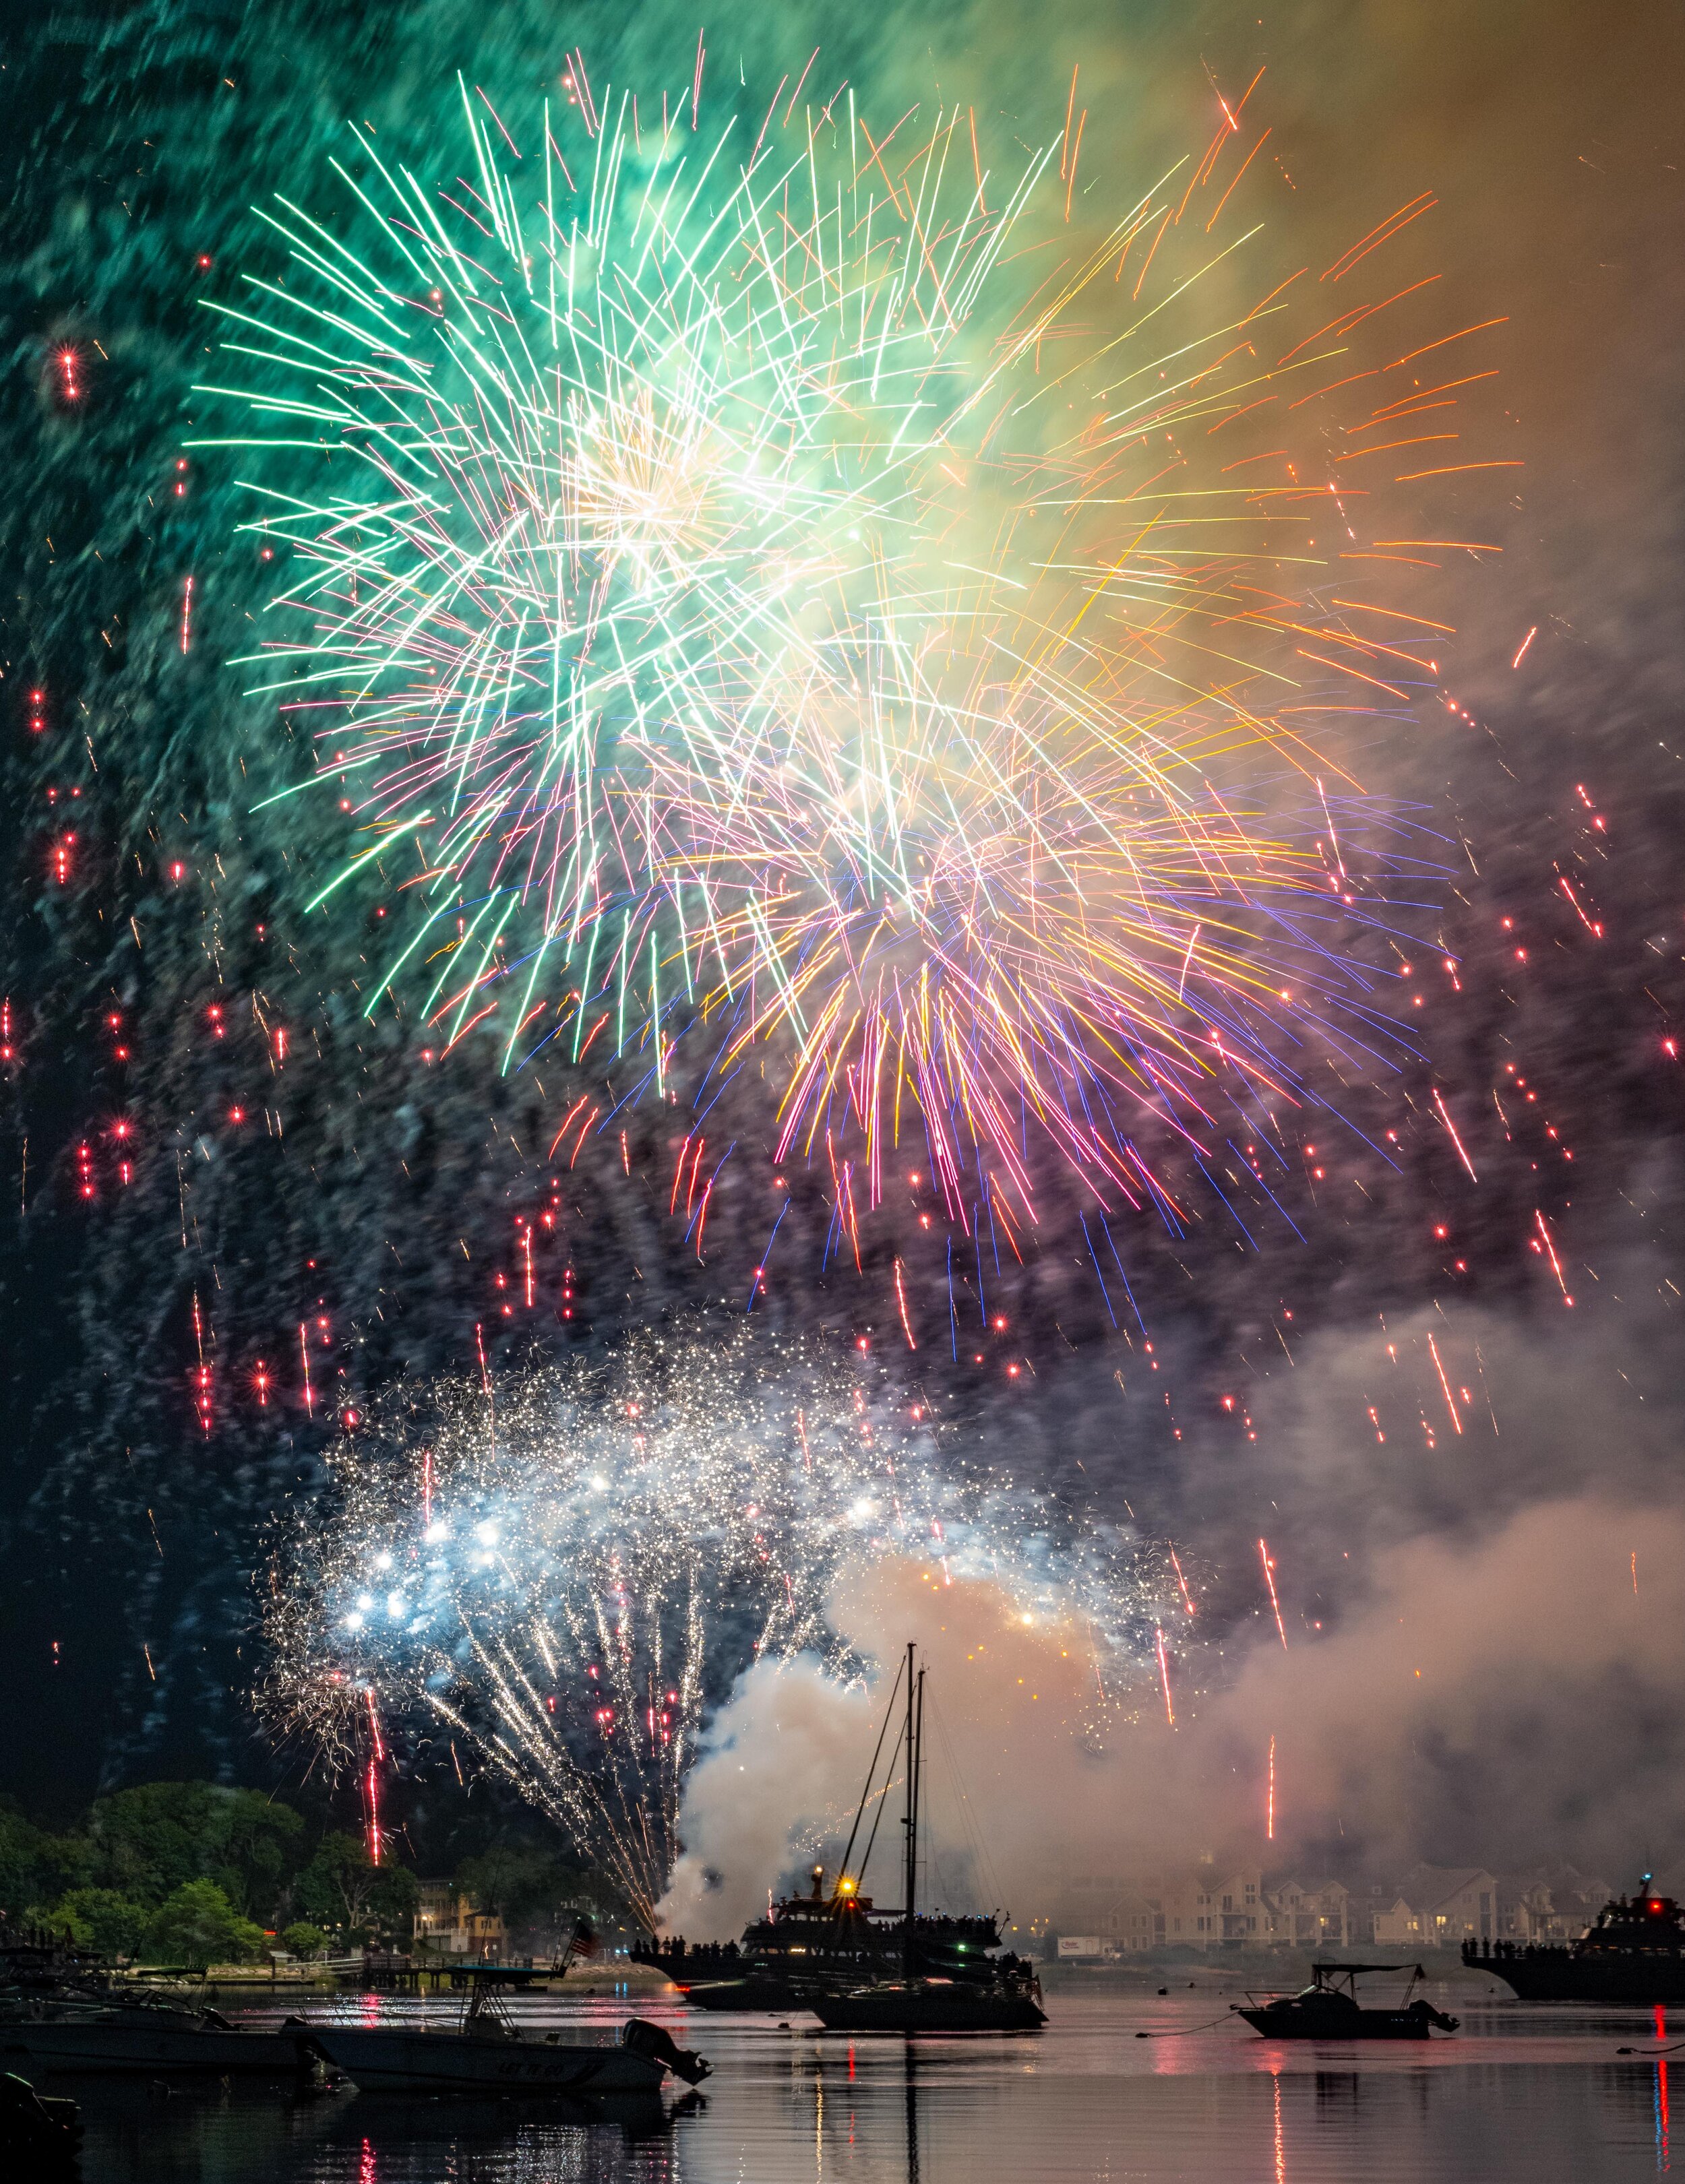 Fireworks light up the sky over Newburyport! — 617 IMAGES BOSTON